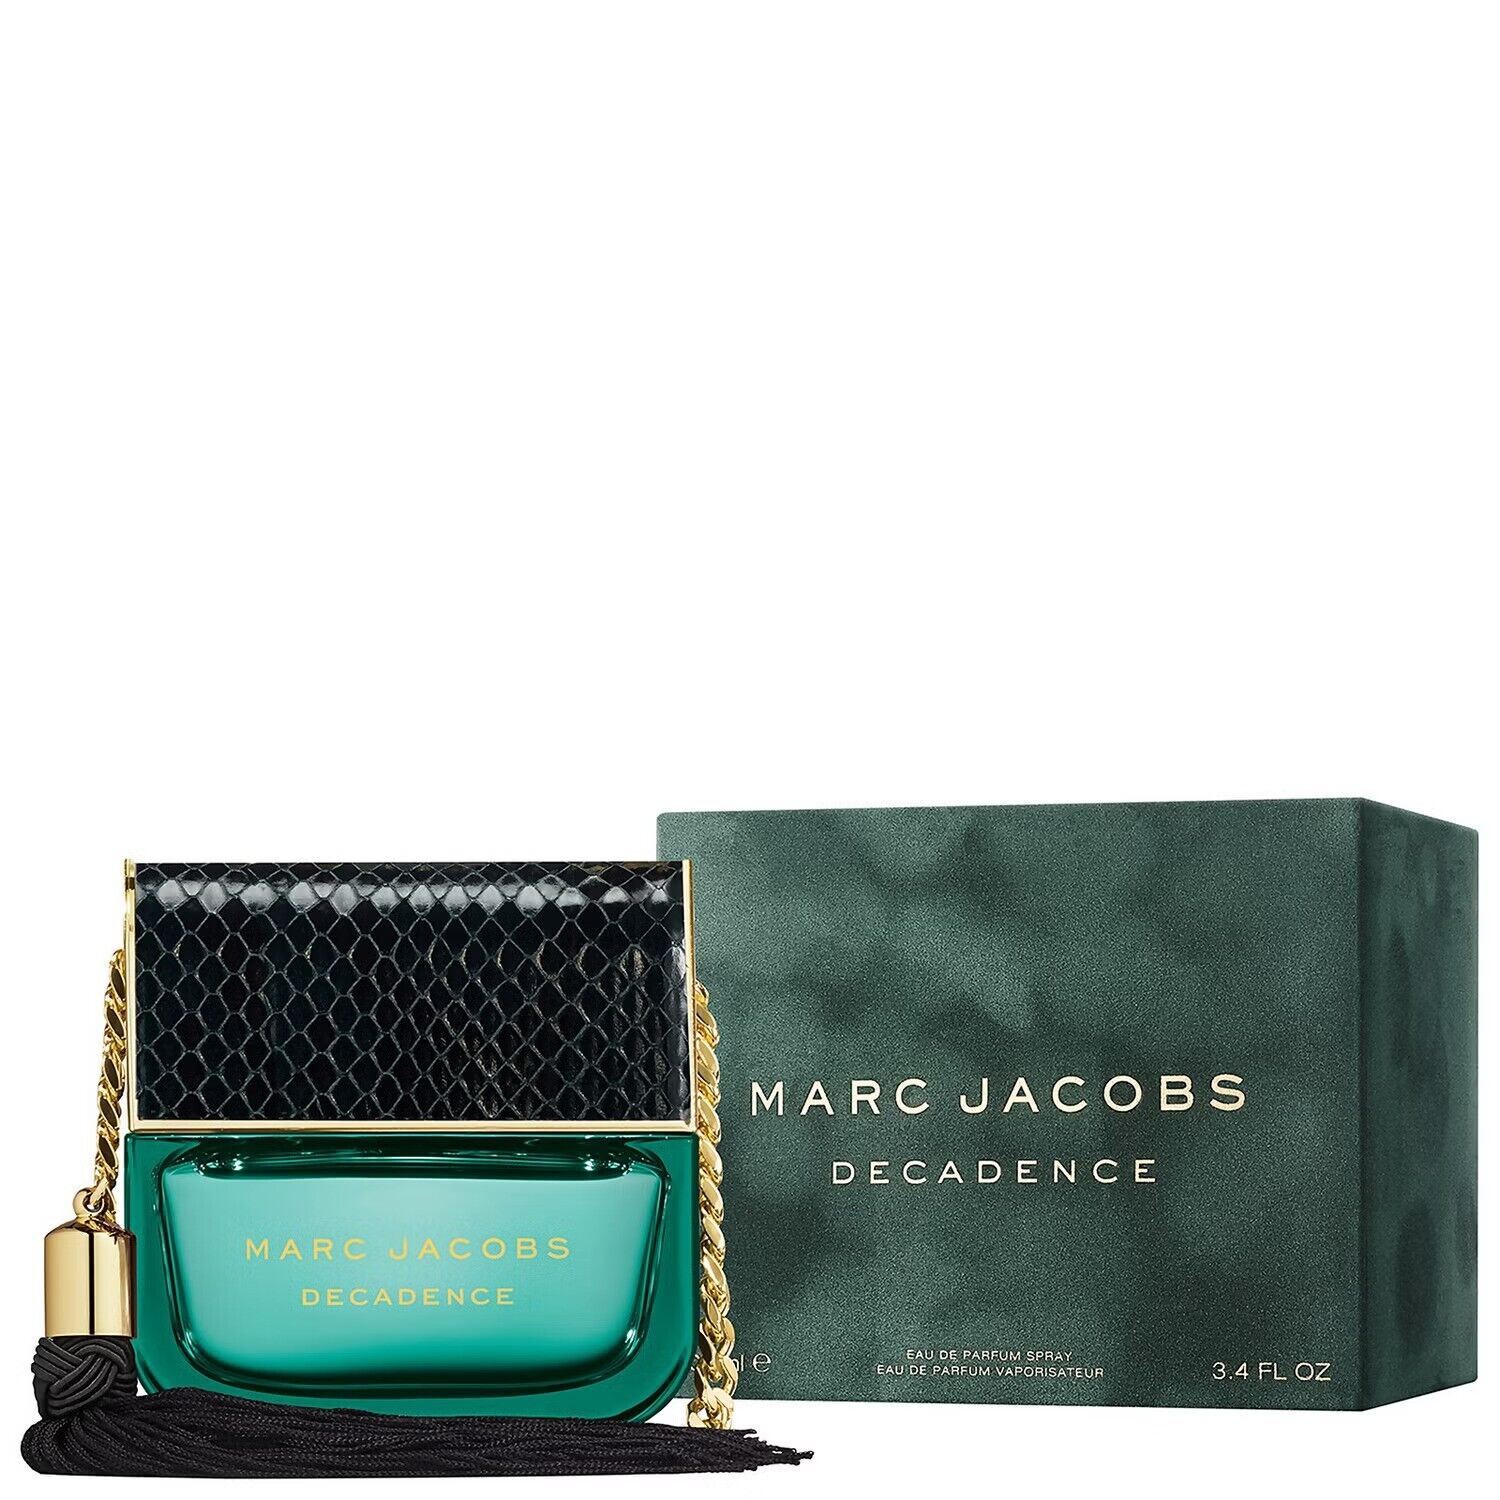 New Marc Jacobs Decadence Eau De Parfum Spray 3.4 oz/ 100 ml for Women